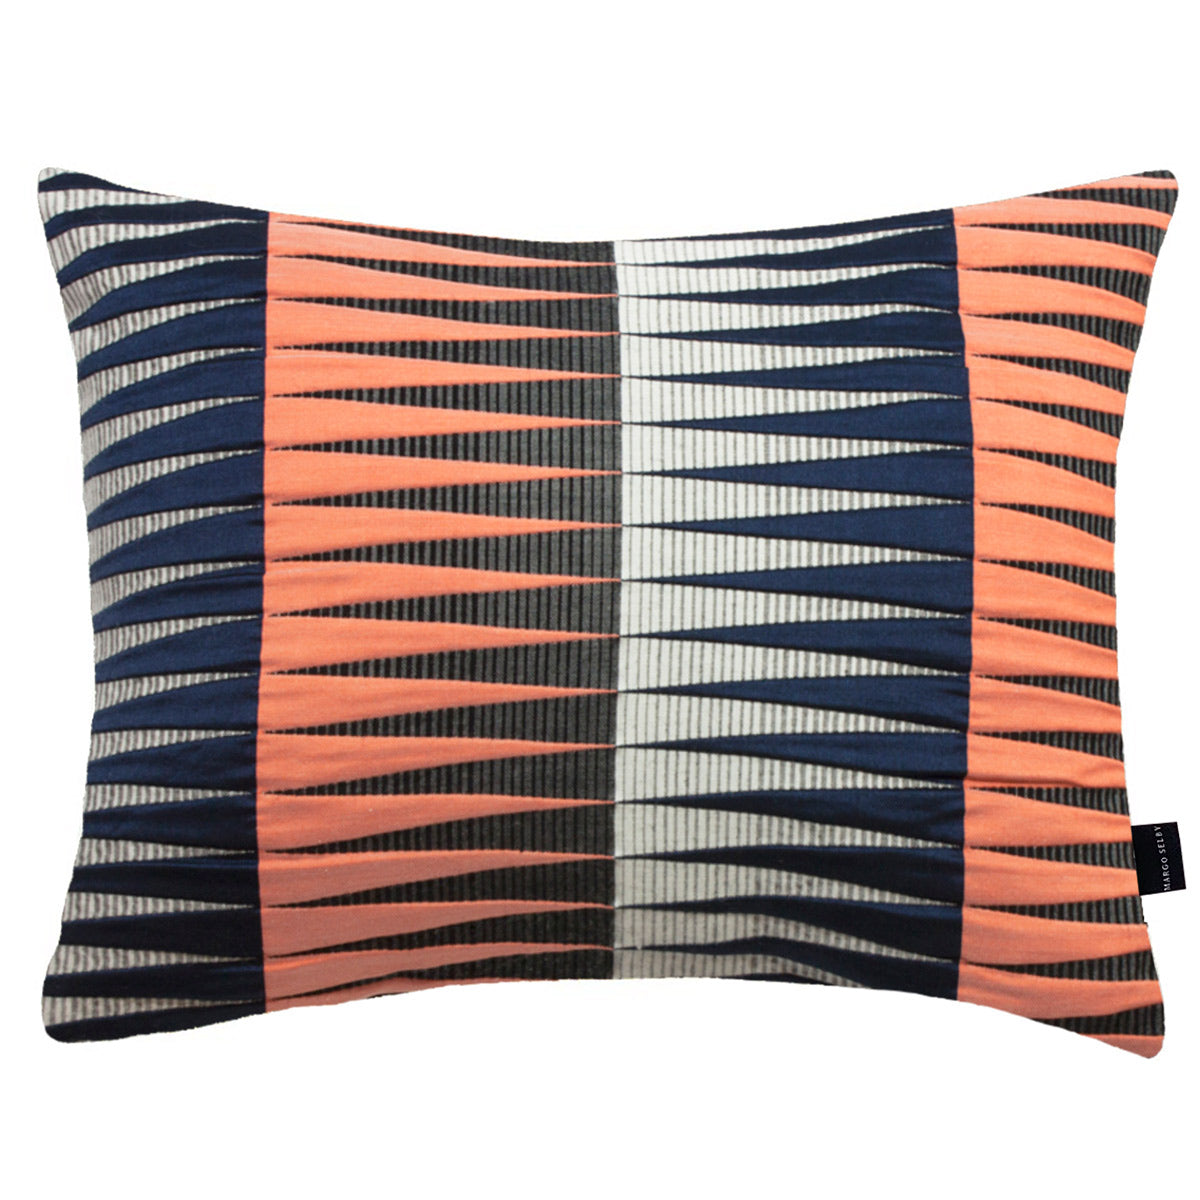 Designer cushion, Decorative cushion, Geometric cushion, Colourful cushion, Luxury cushion, Seat cushion,  couch cushion covers, Cushion cover, blue cushion, orange cushion